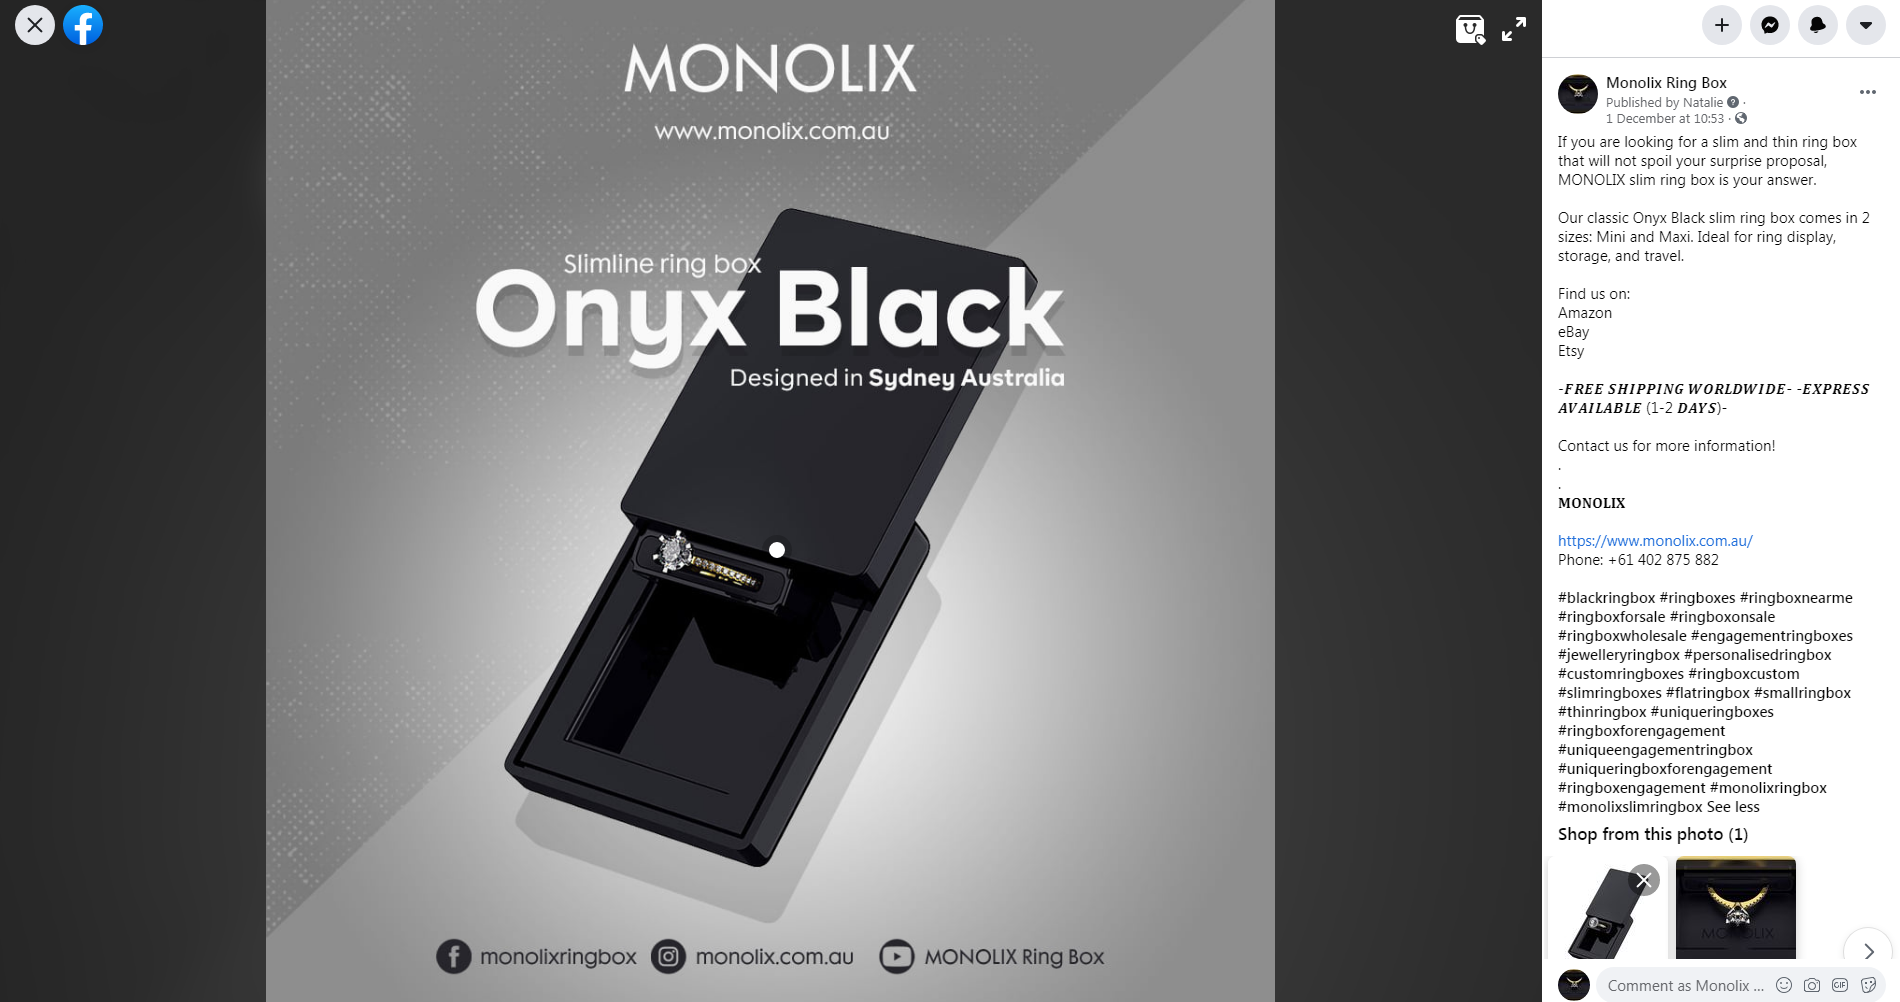 Monolix Ring Box Facebook Page - Social Media Marketing - Top4 Marketing